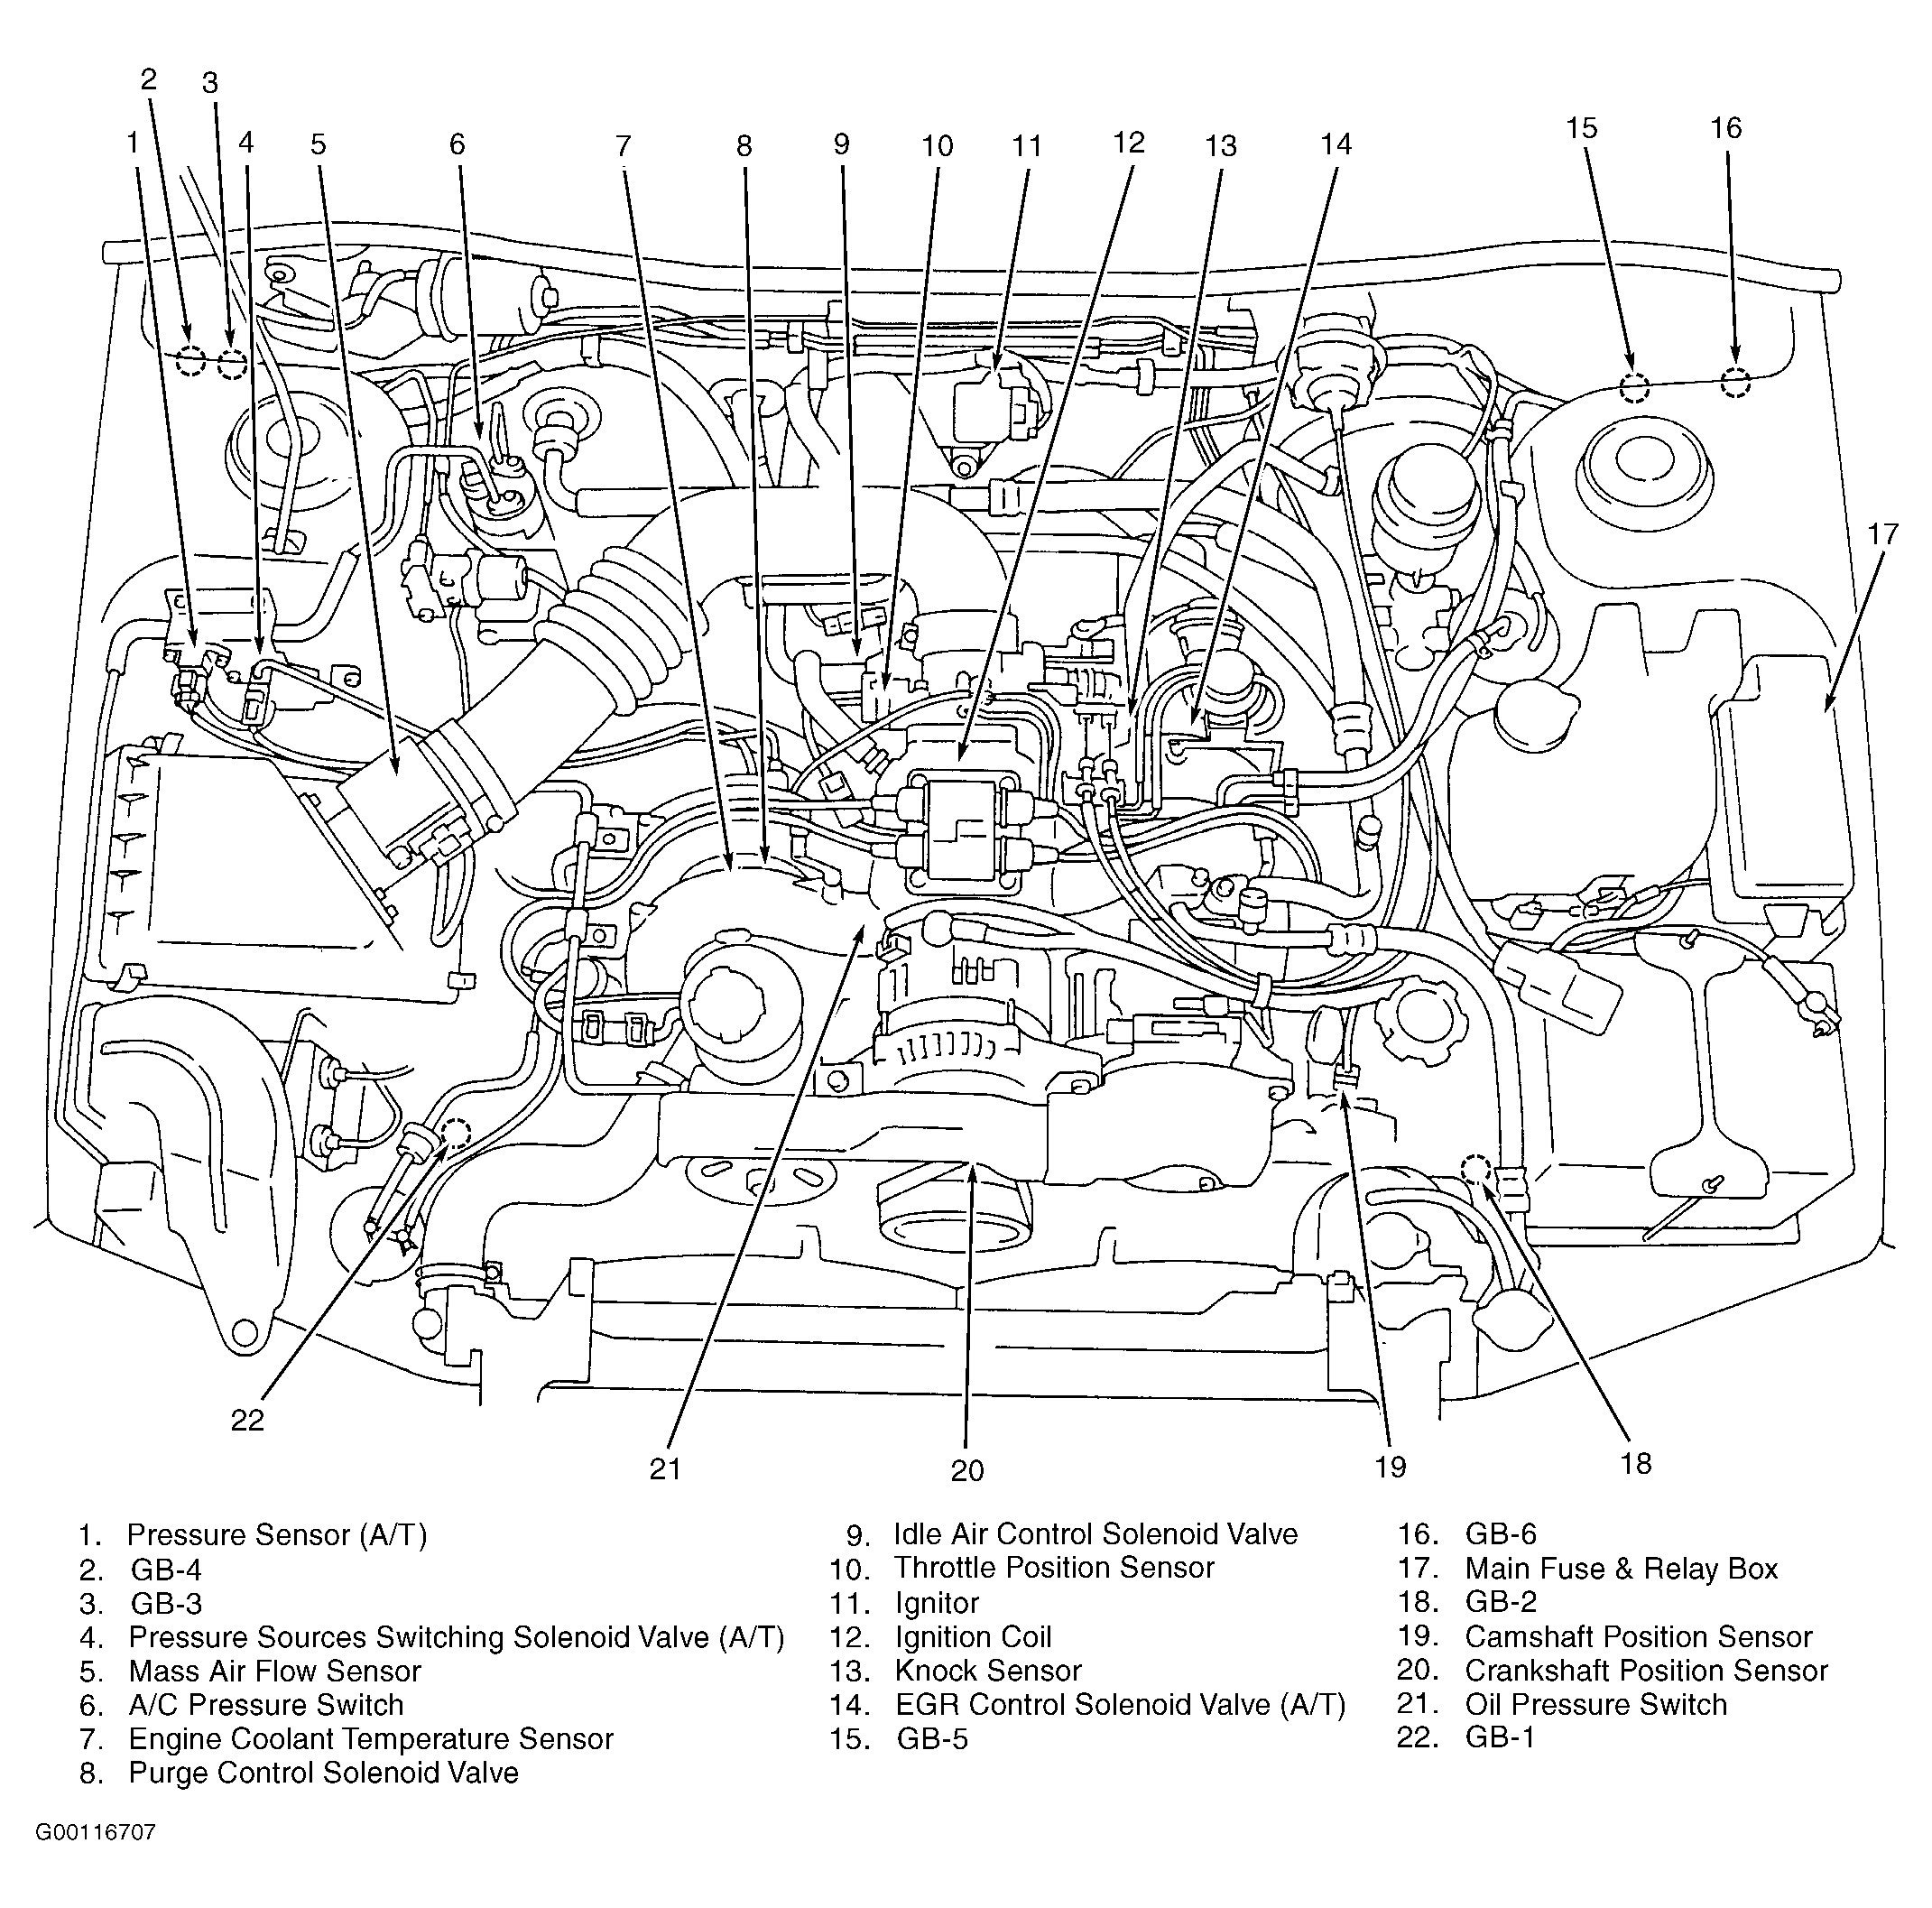 Subaru Wrx Engine Diagram 1997 Subaru Engine Diagram Wiring Diagrams Of Subaru Wrx Engine Diagram